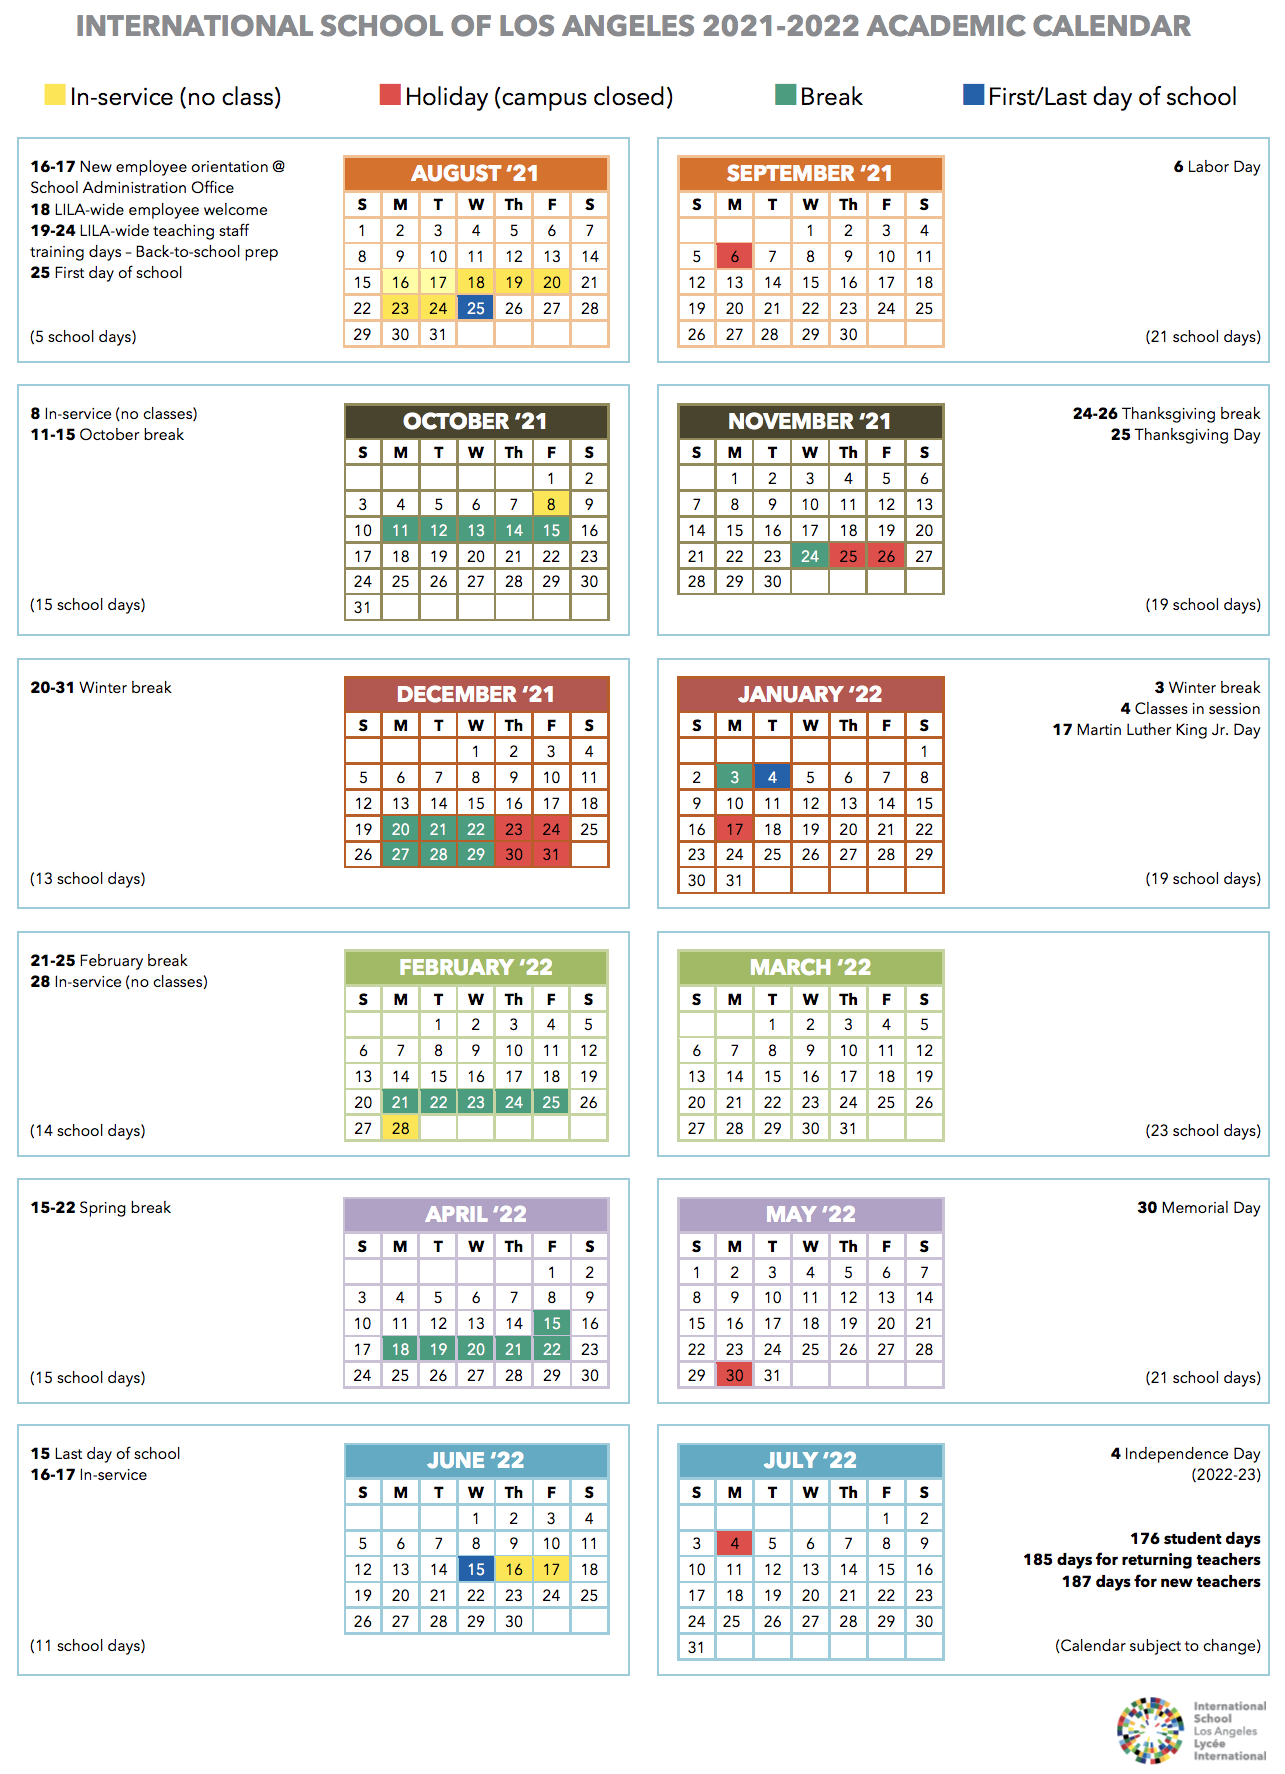 Csulb 2022 Calendar Calendar | International School Of Los Angeles